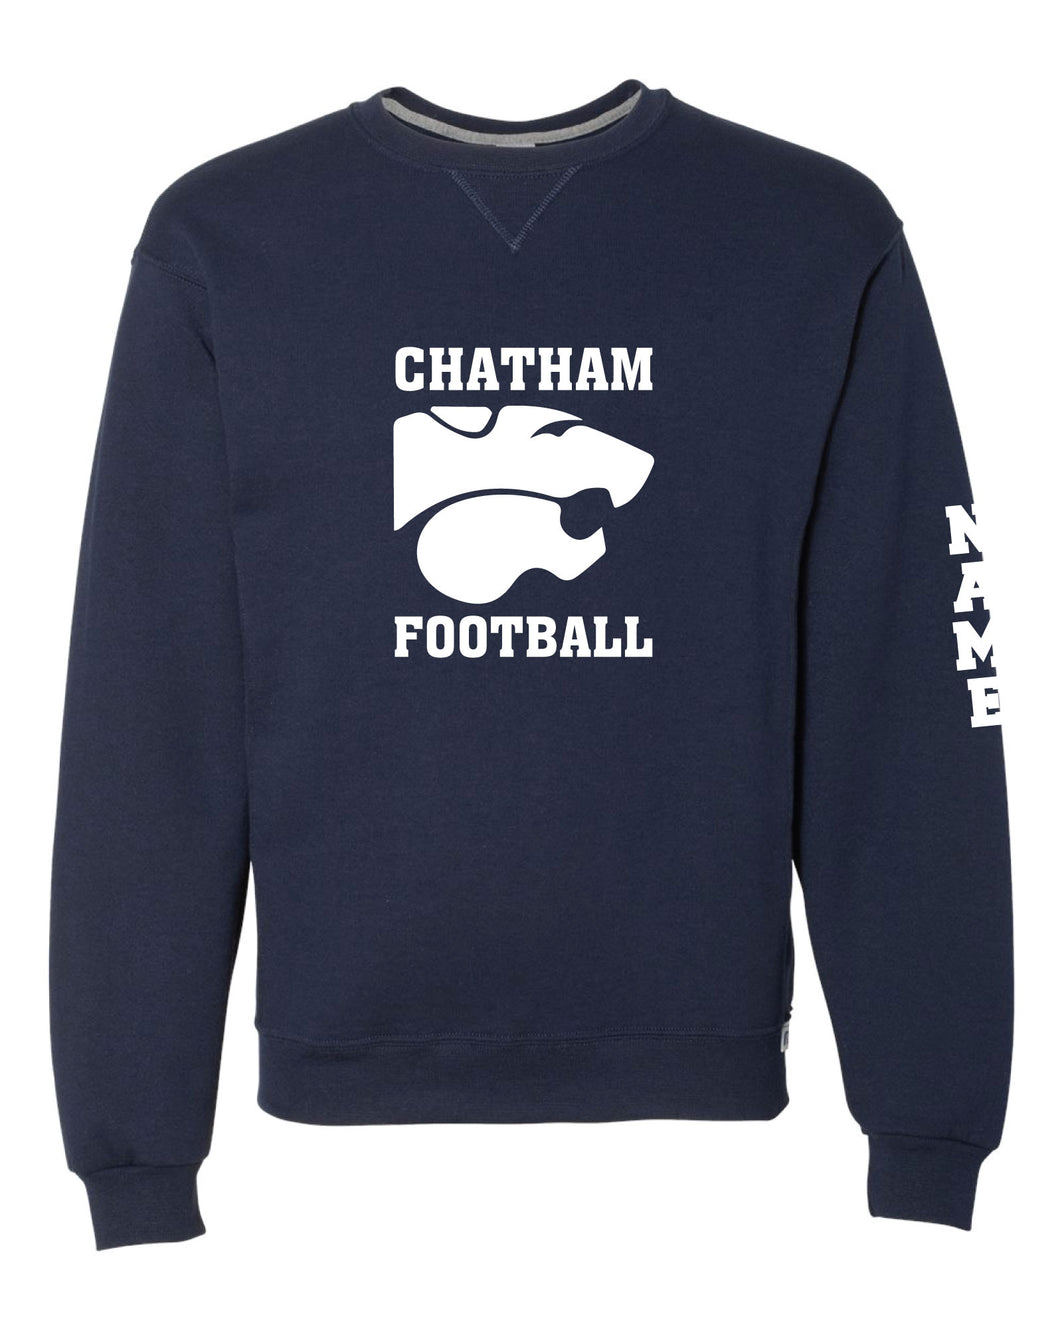 Chatham Football Russell Athletic Cotton Crewneck Sweatshirt - Navy